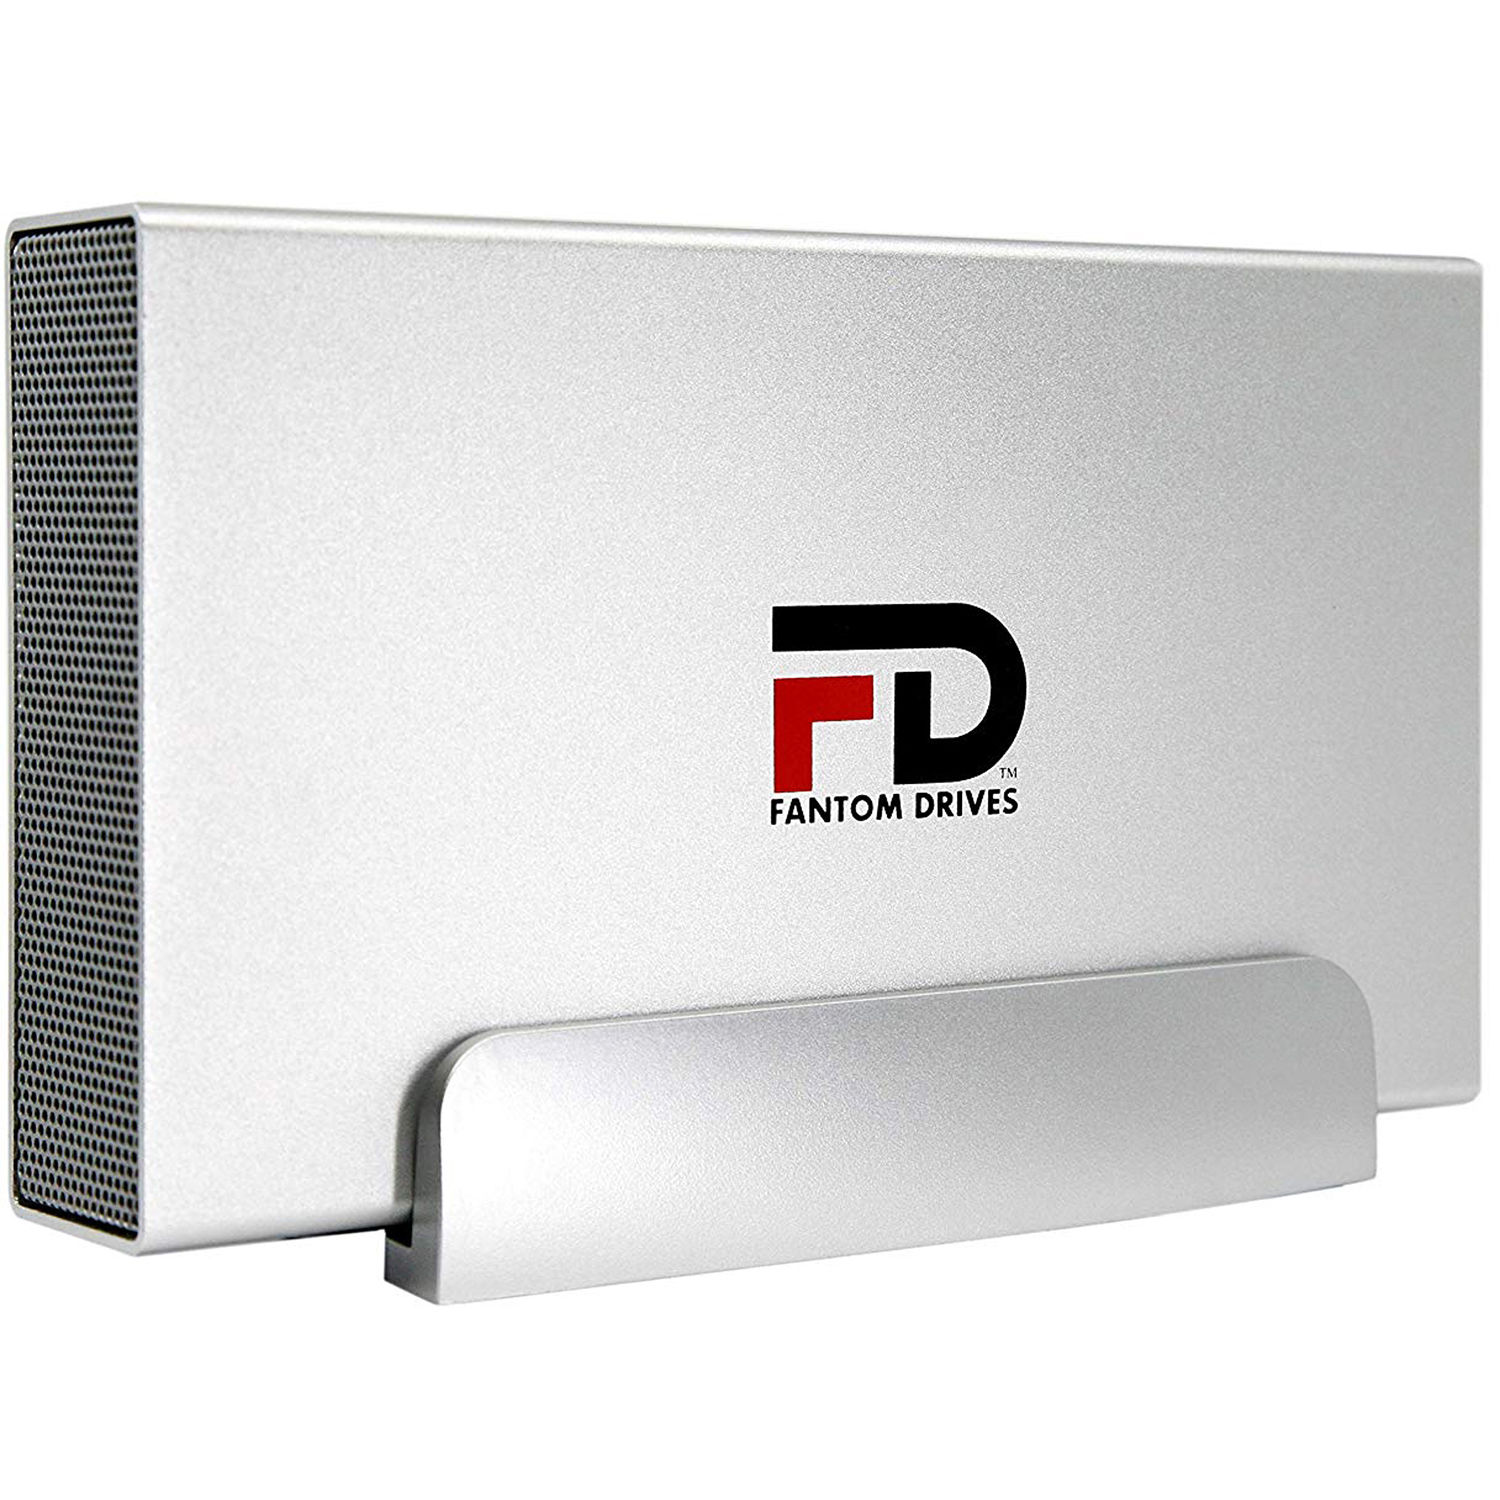 Fantom 10TB G-Force3 USB 3.0 External Hard Drive (Silver)